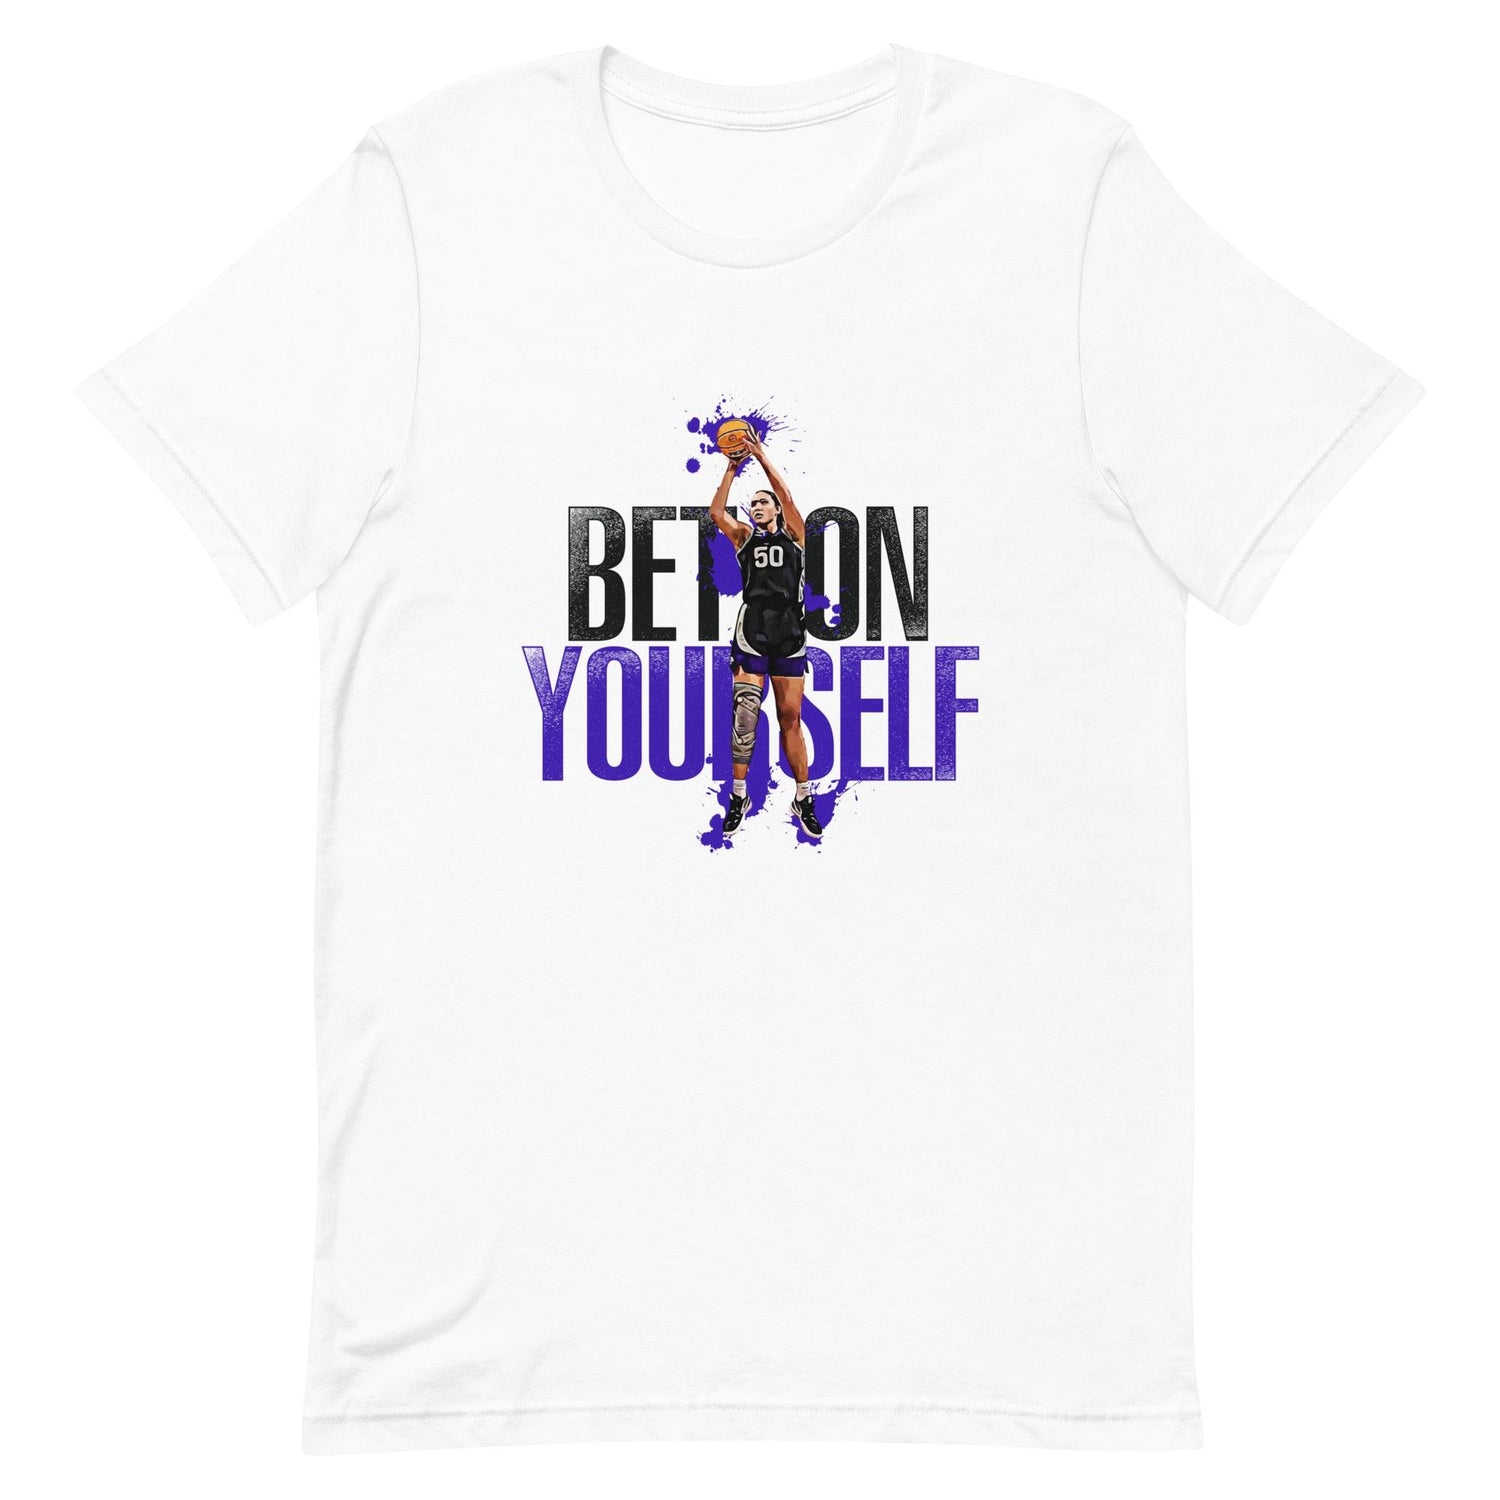 Ayoka Lee "Bet On Yourself" t-shirt - Fan Arch